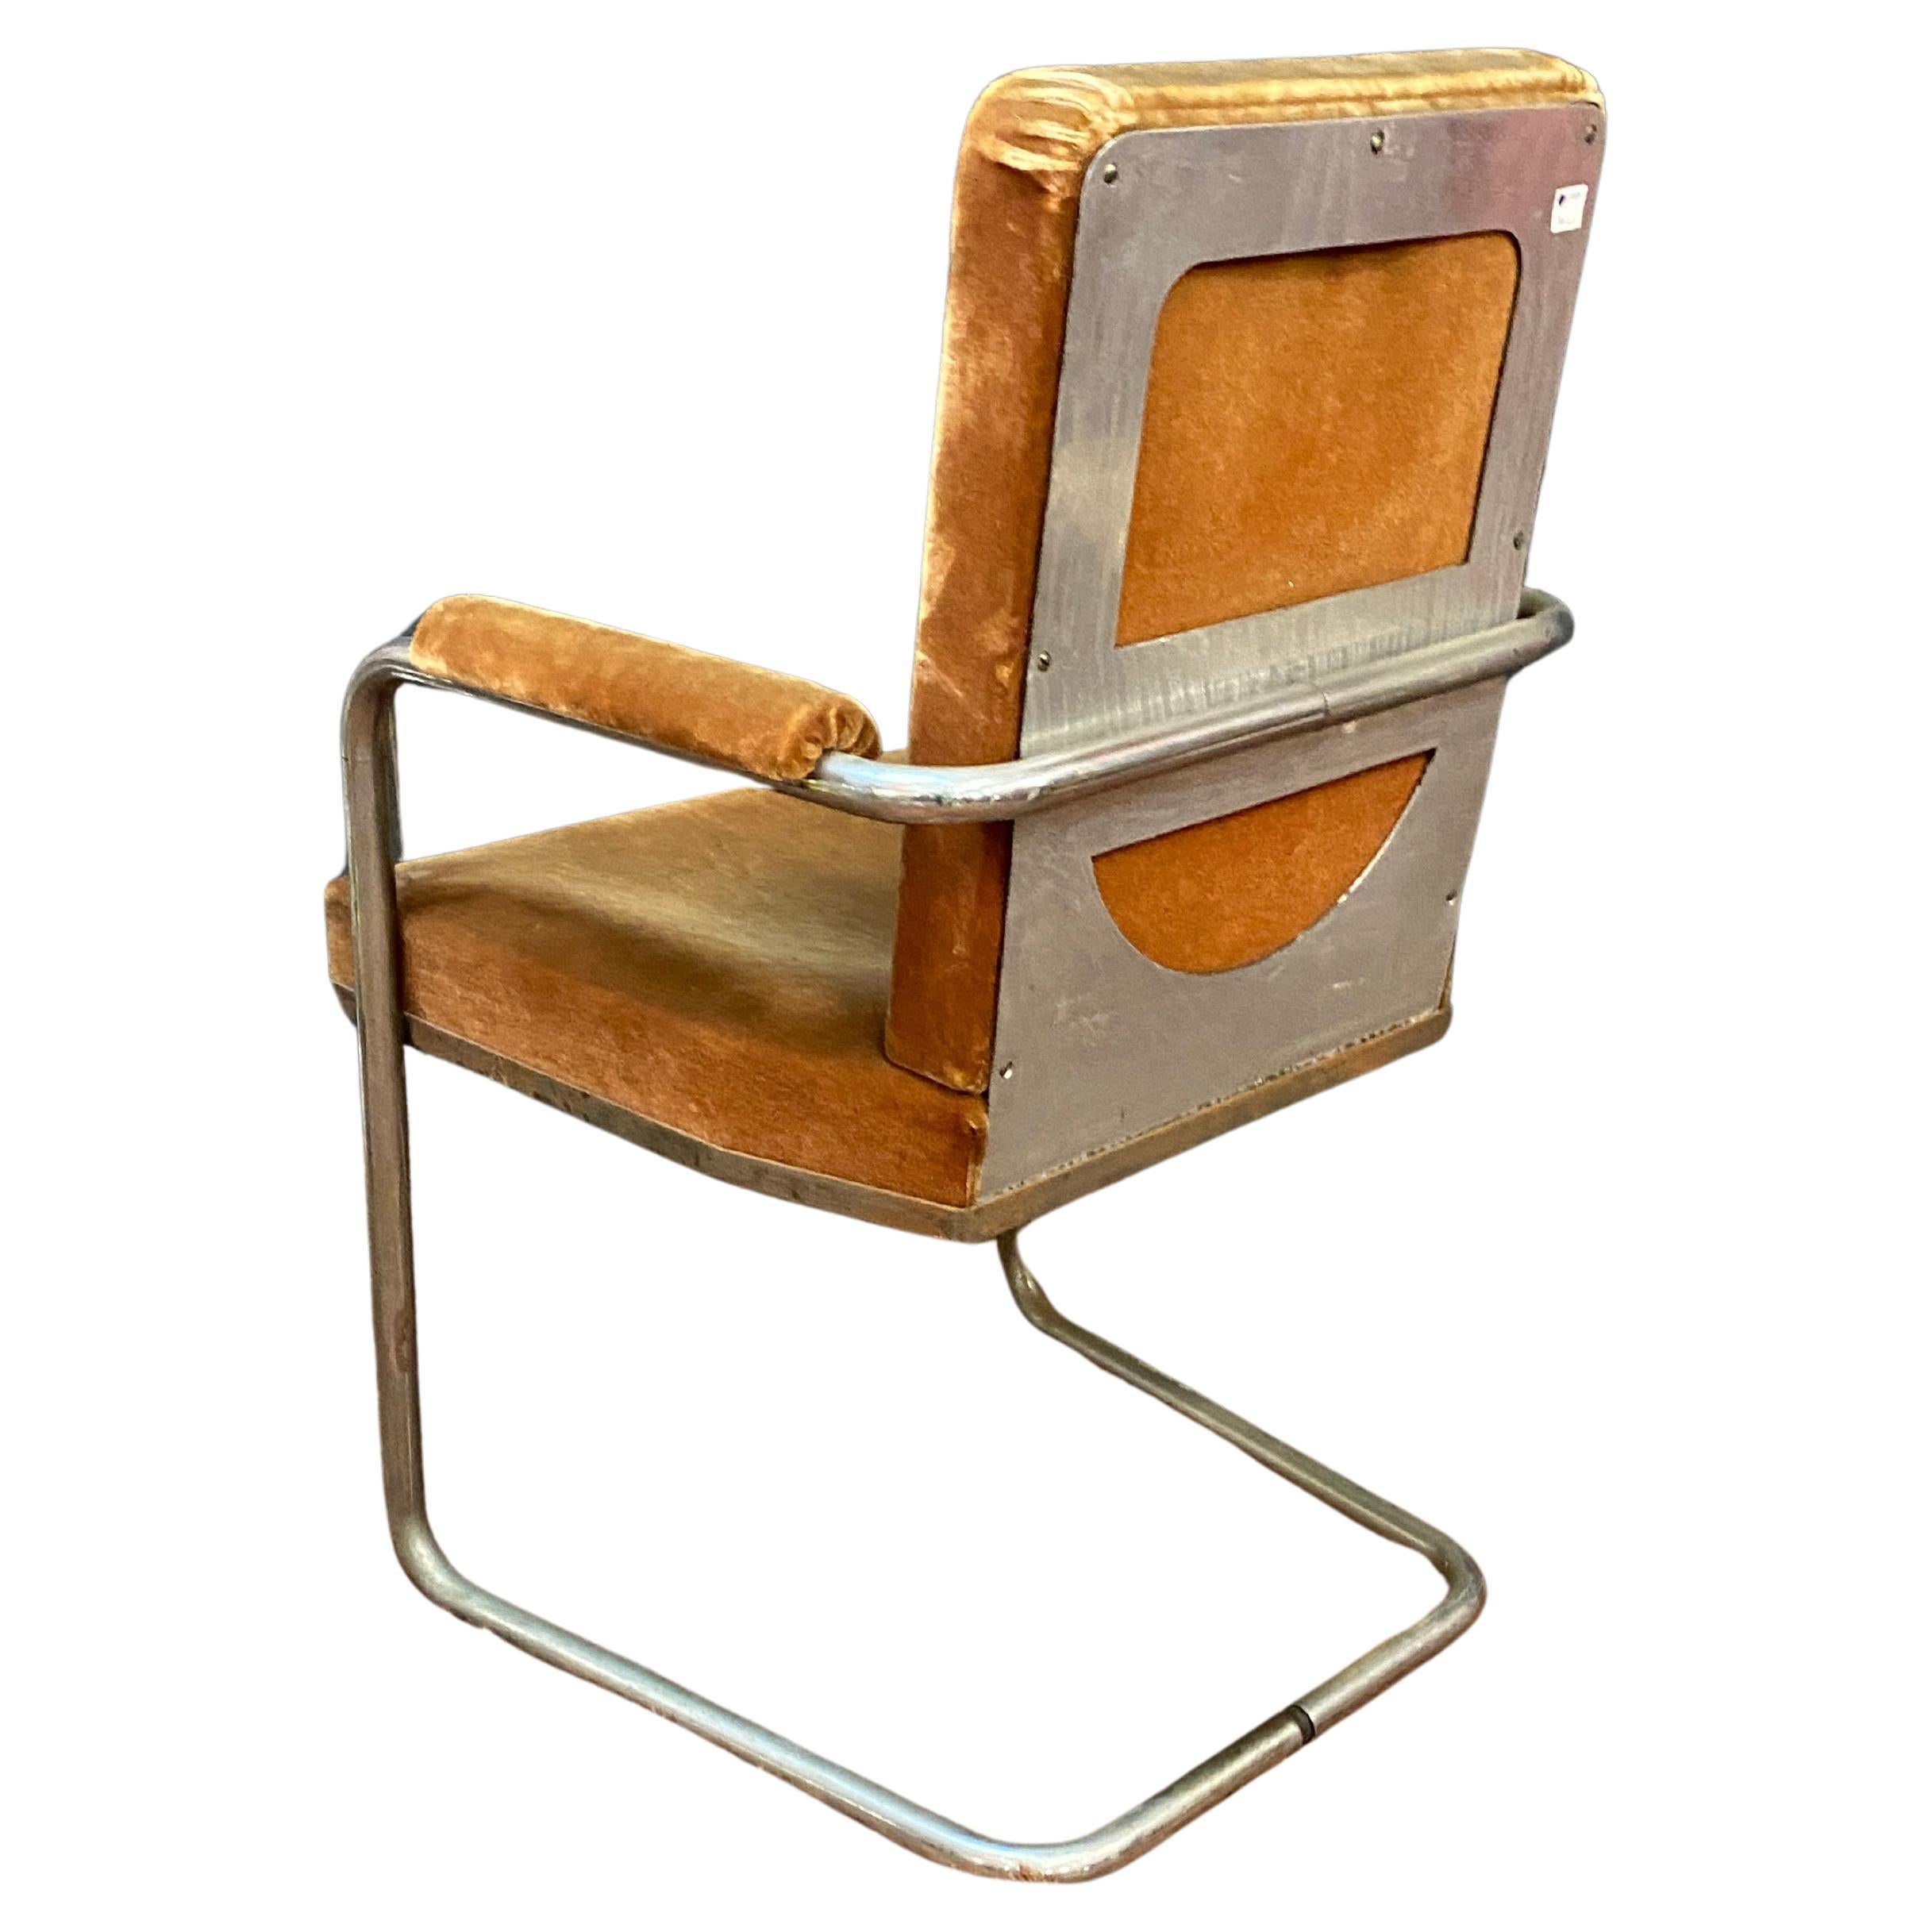  art deco modernist chair circa 1930 For Sale